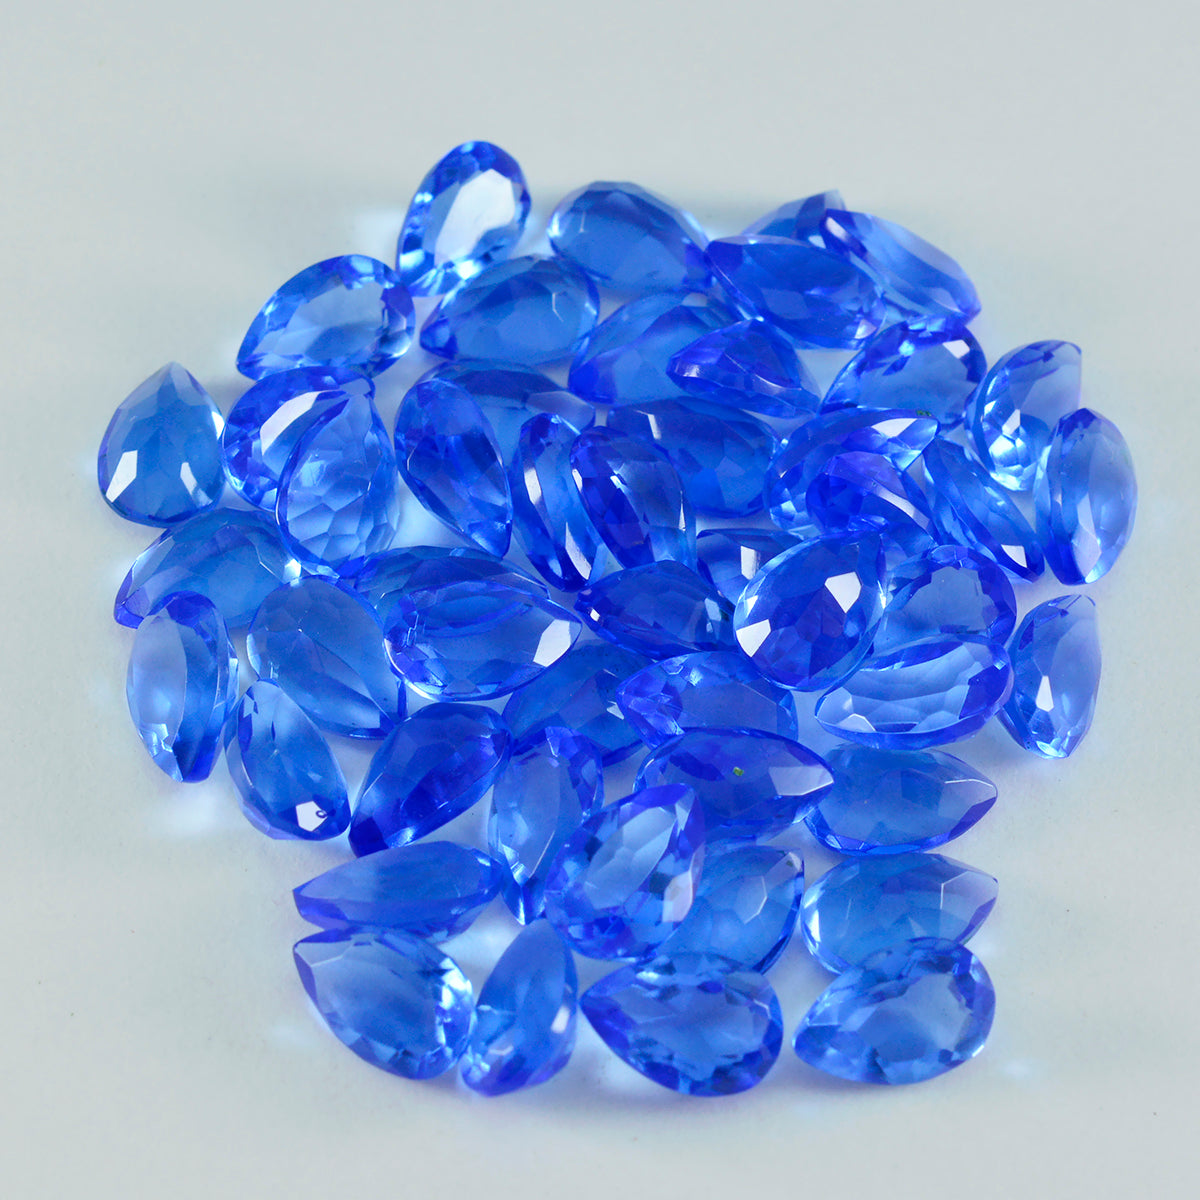 Riyogems 1PC Blue Sapphire CZ Faceted 5x7 mm Pear Shape nice-looking Quality Gems